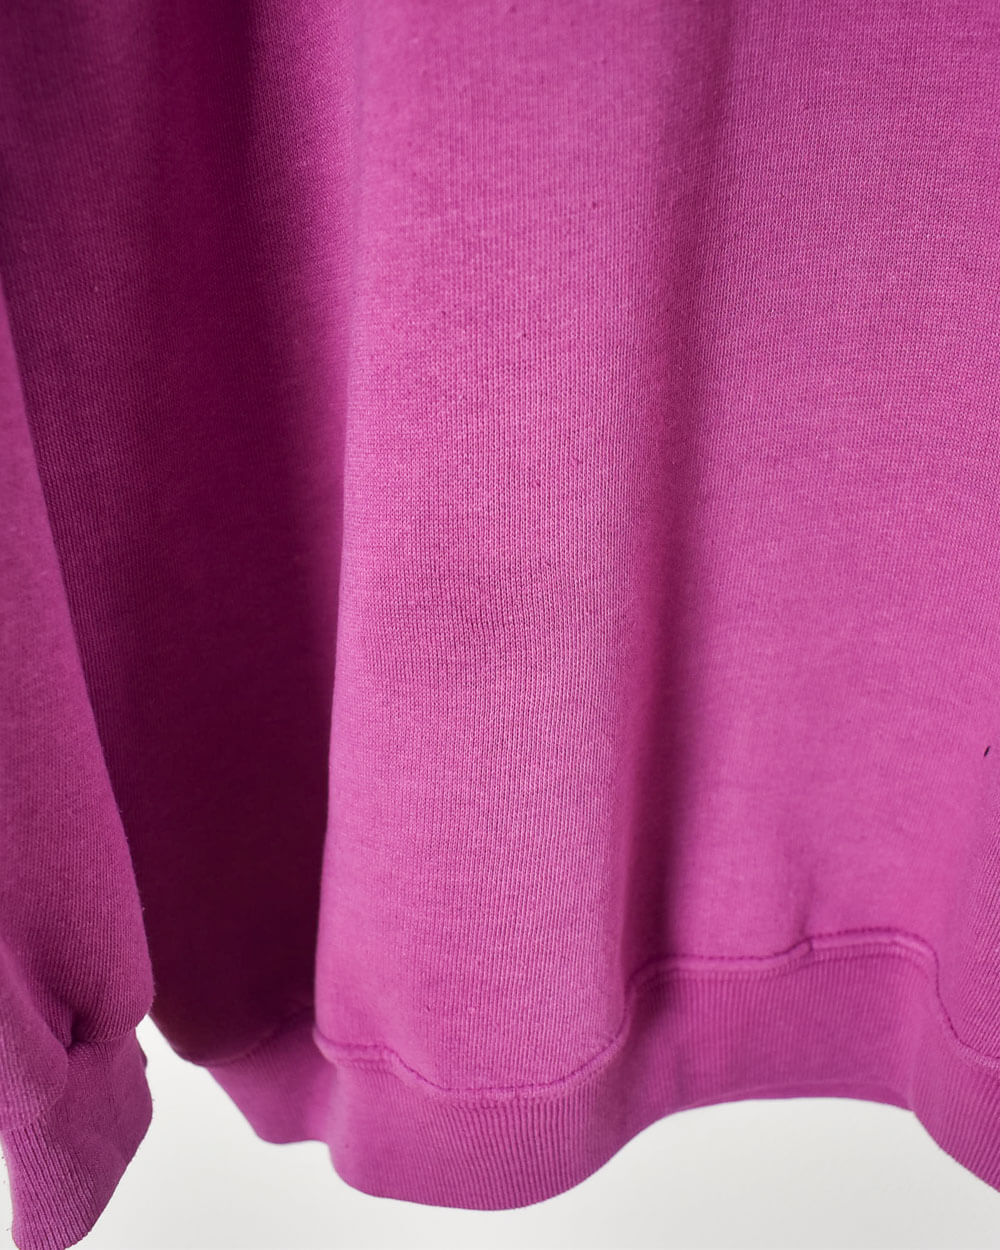 Purple Nike Authentic Sports Gear Sweatshirt - Medium